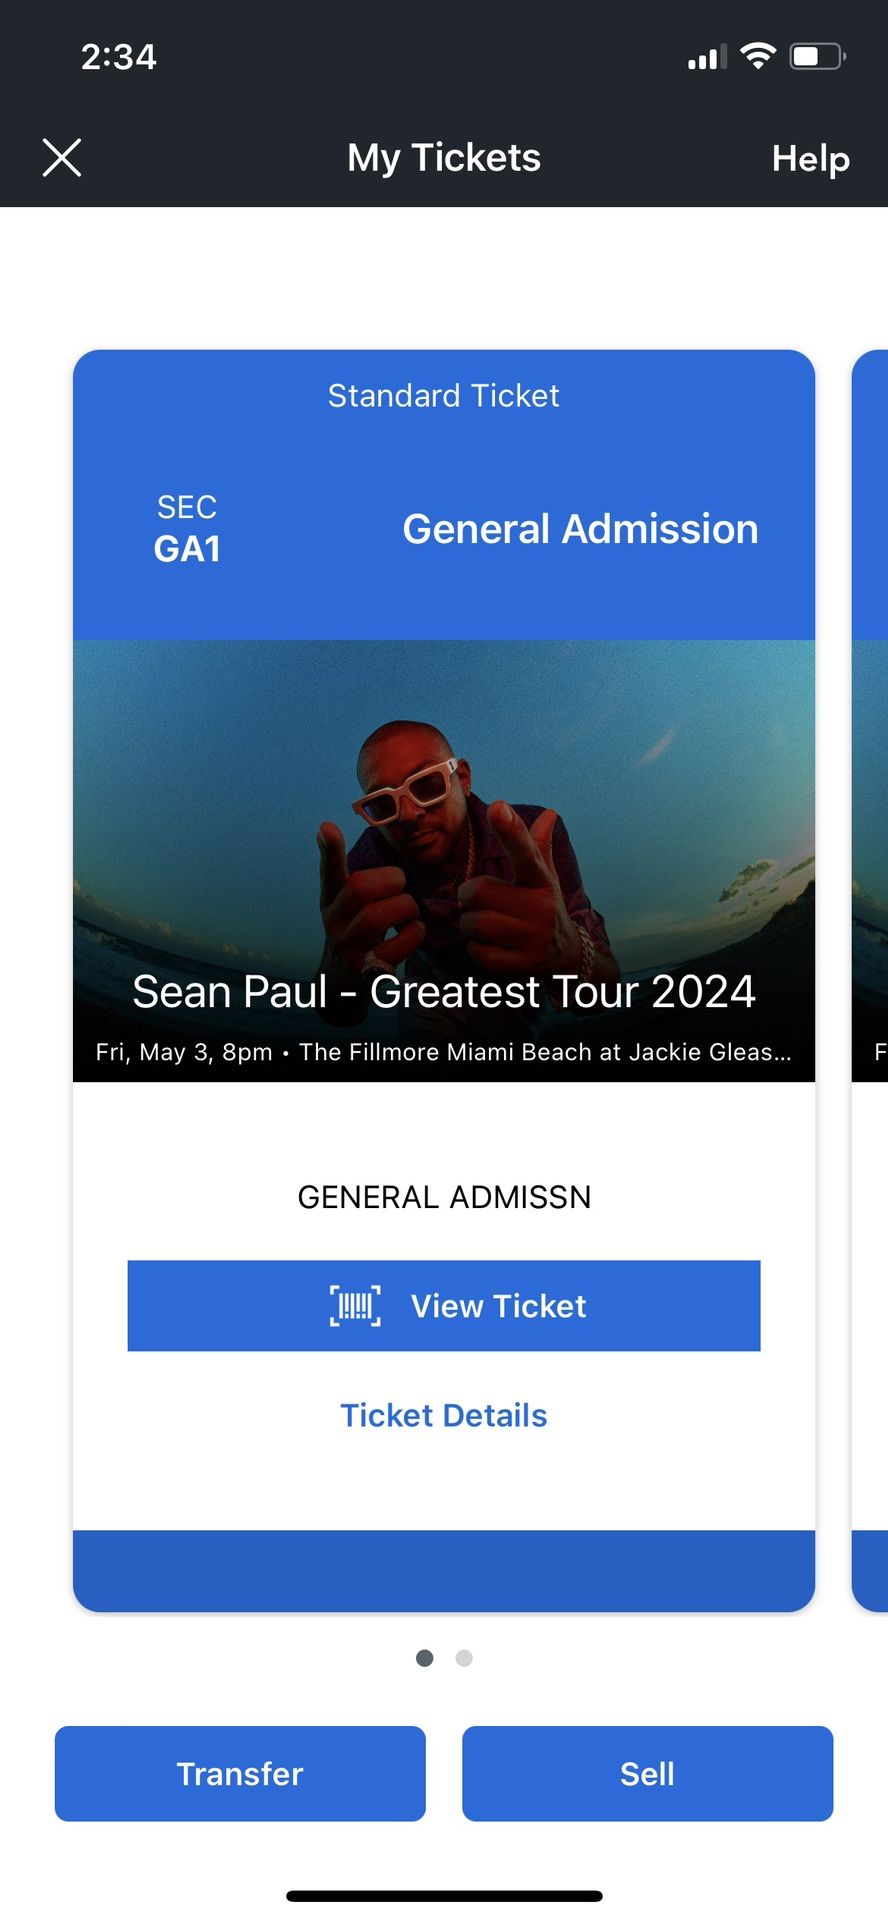 Sean Paul Tickets - the Greatest tour 